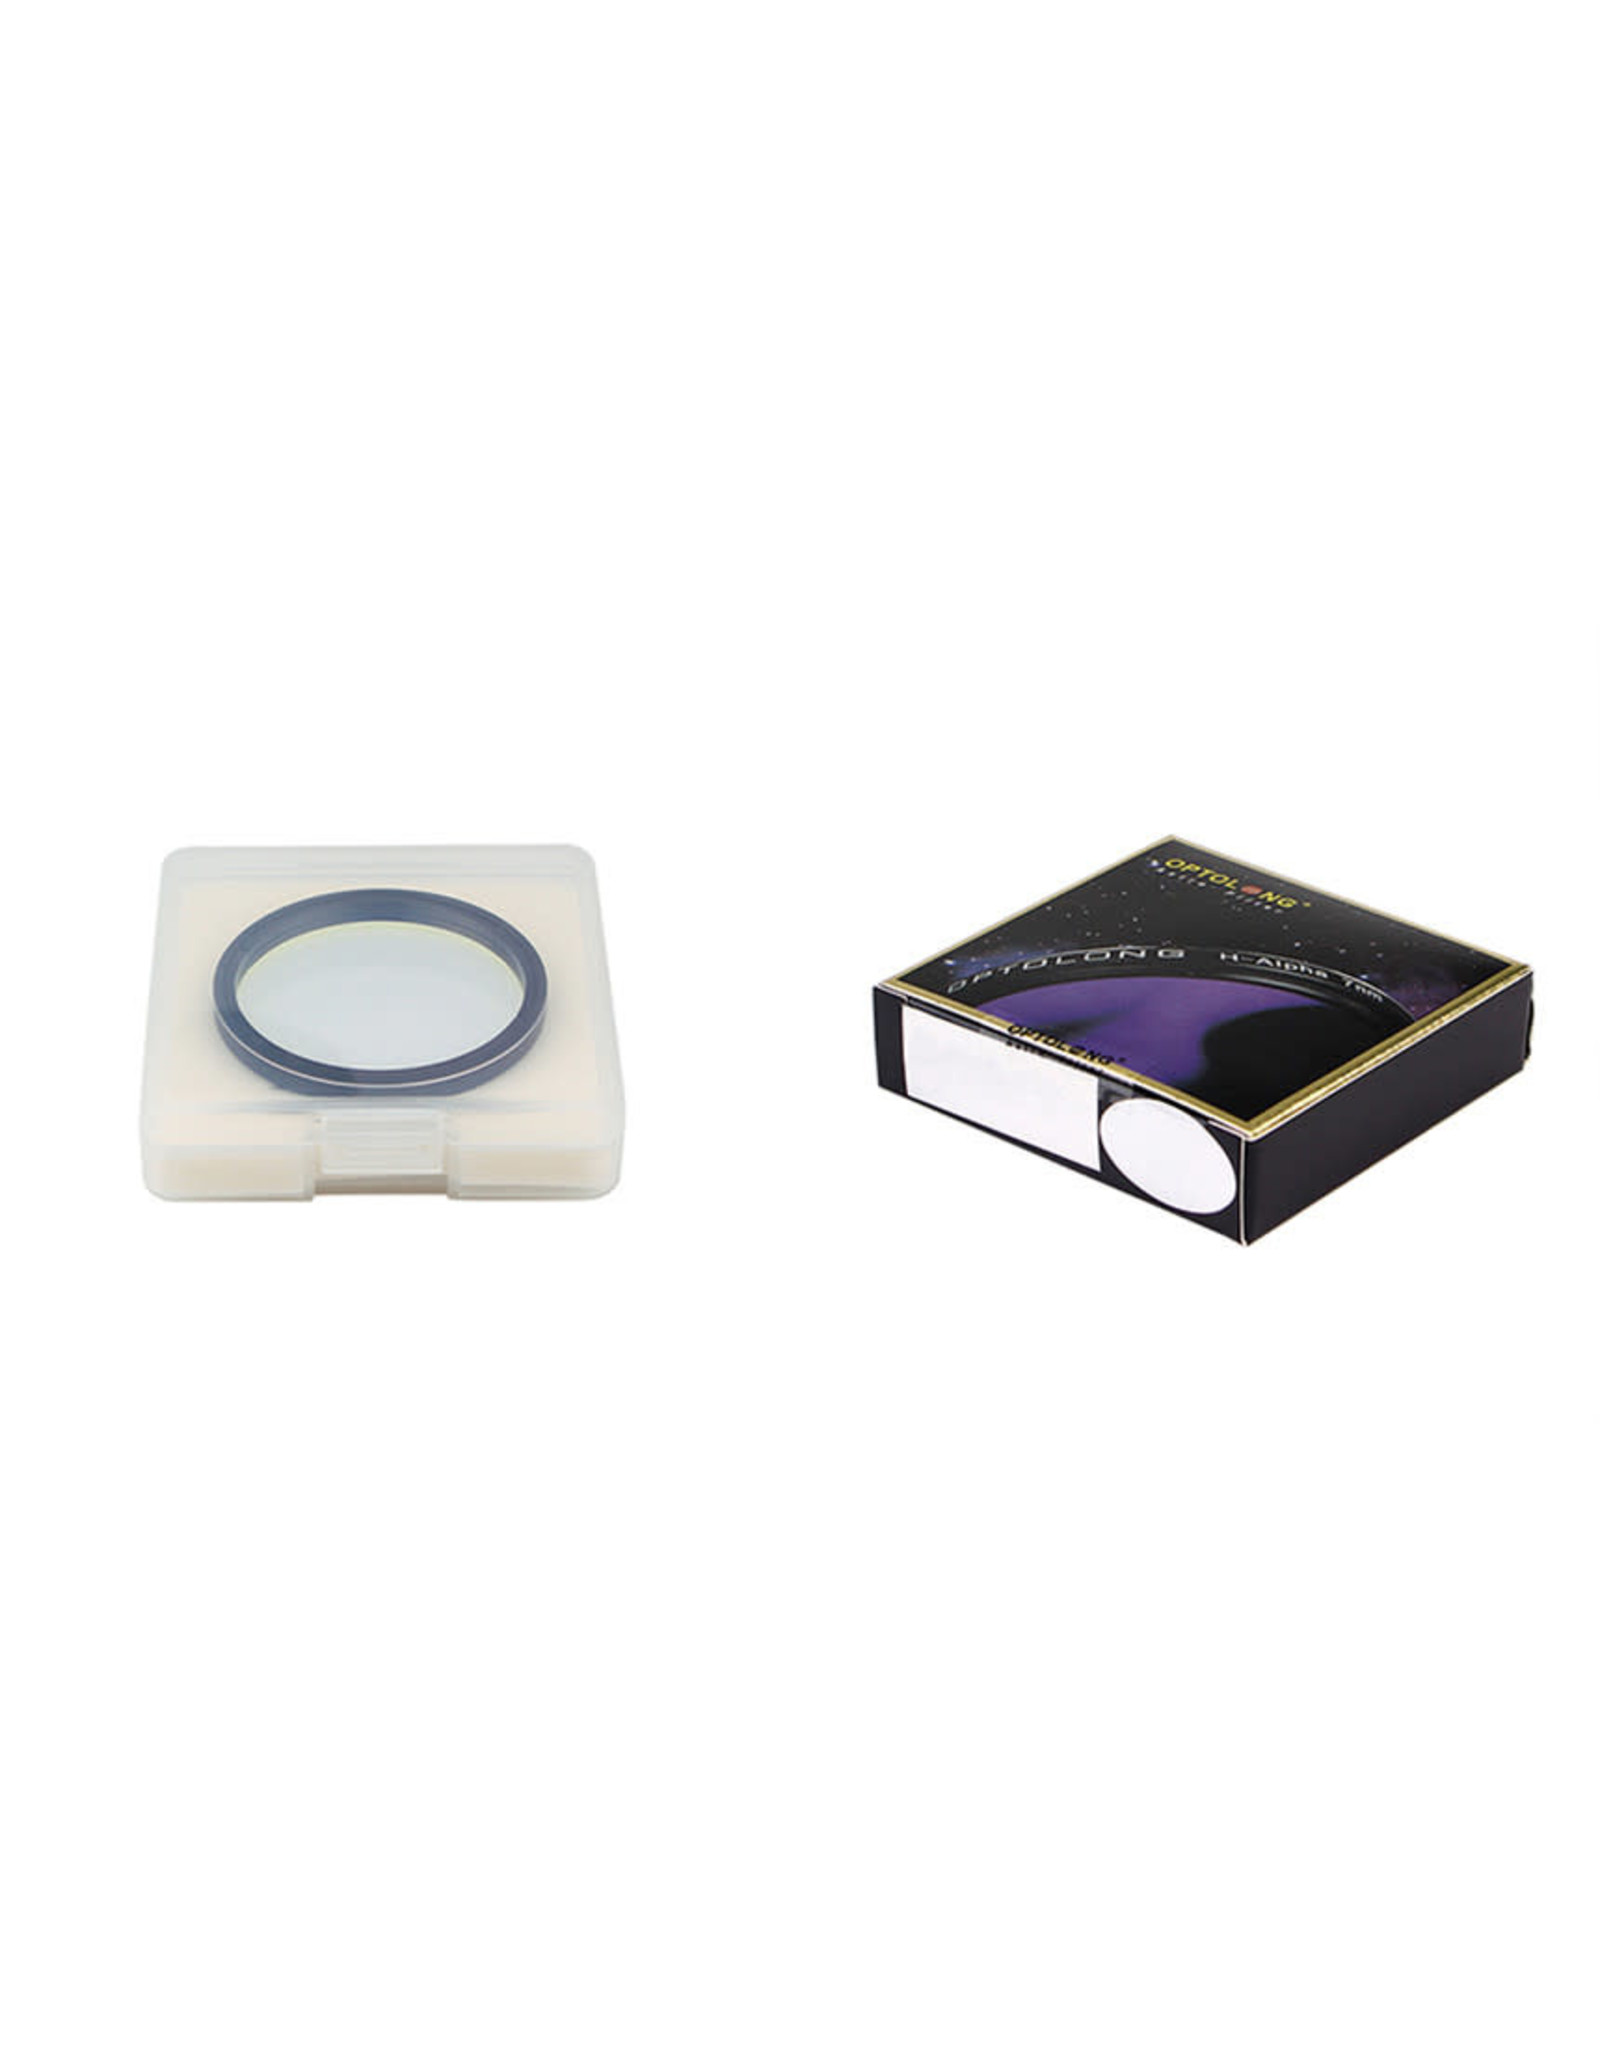 Optolong Optolong 5 Filter Set LRGB & H-Alpha 36mm unmounted